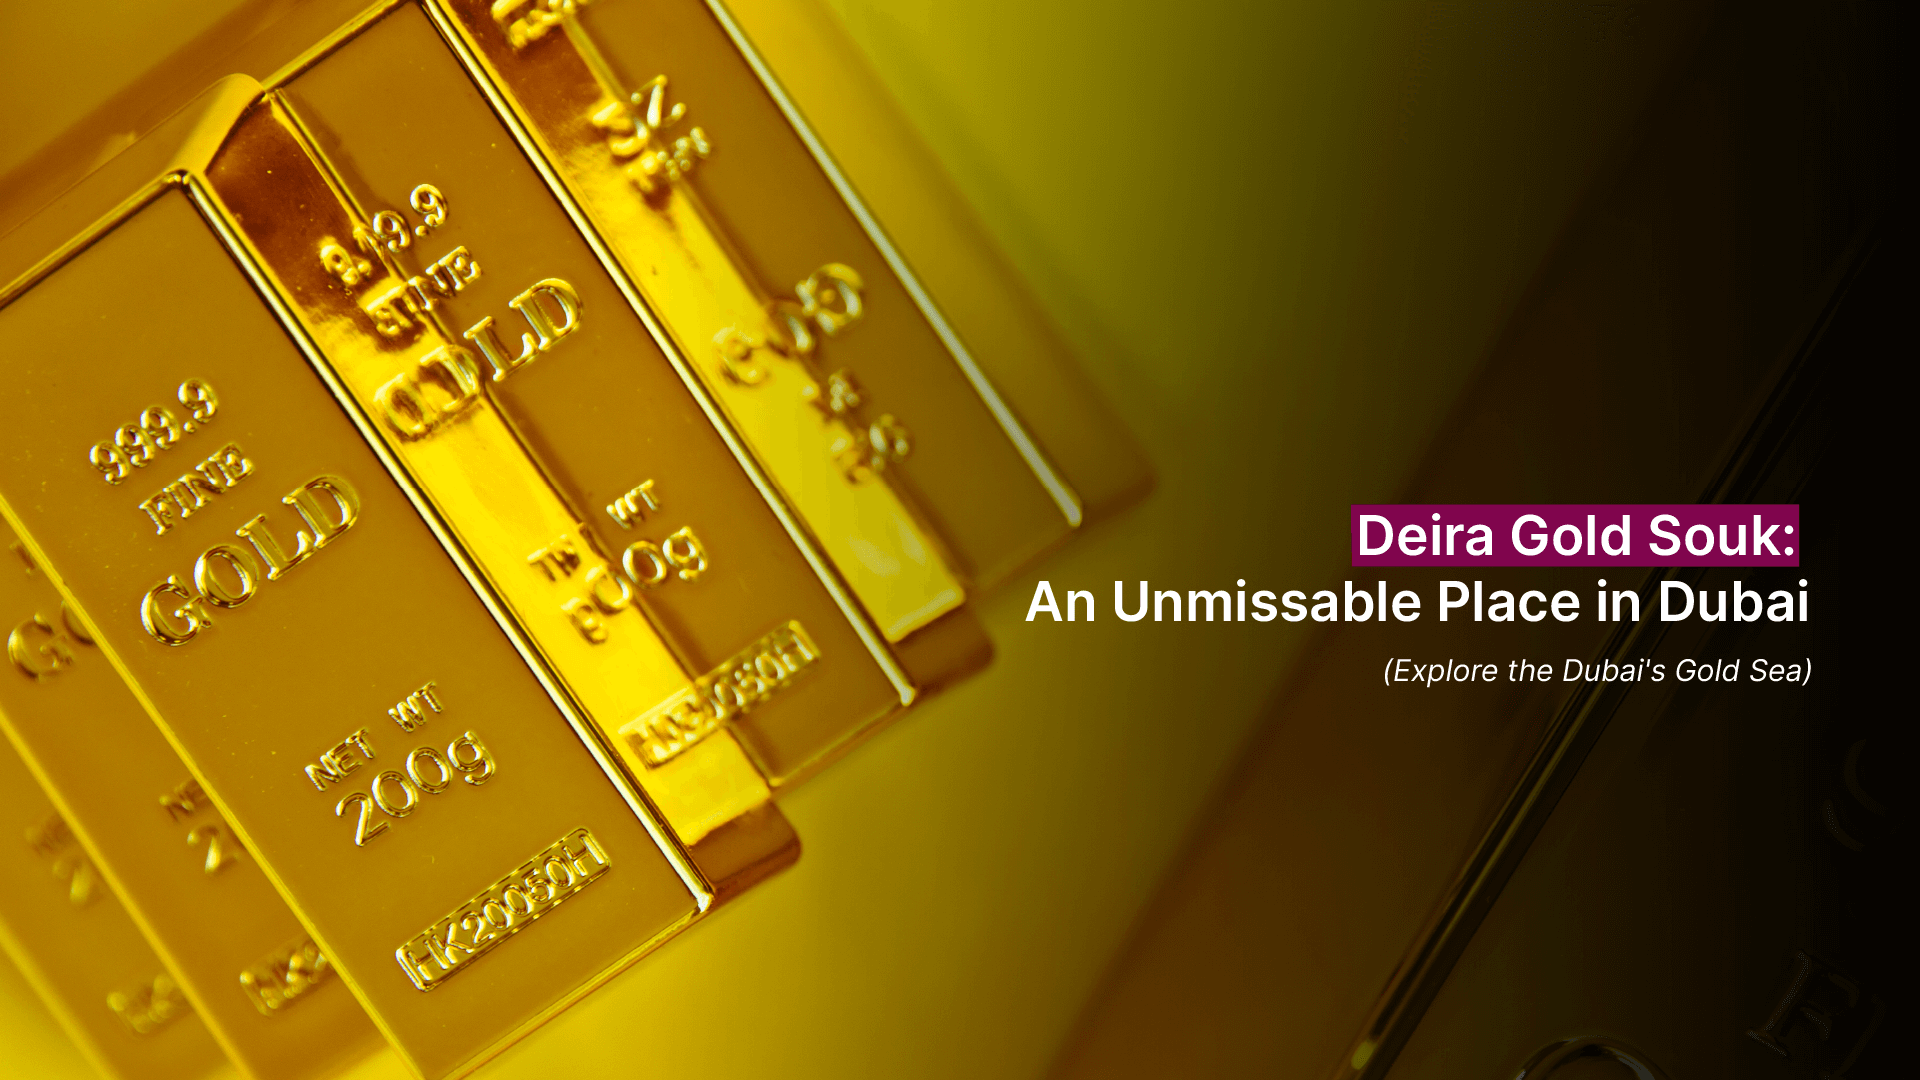 Deira Gold Souk: An Unmissable Place in Dubai